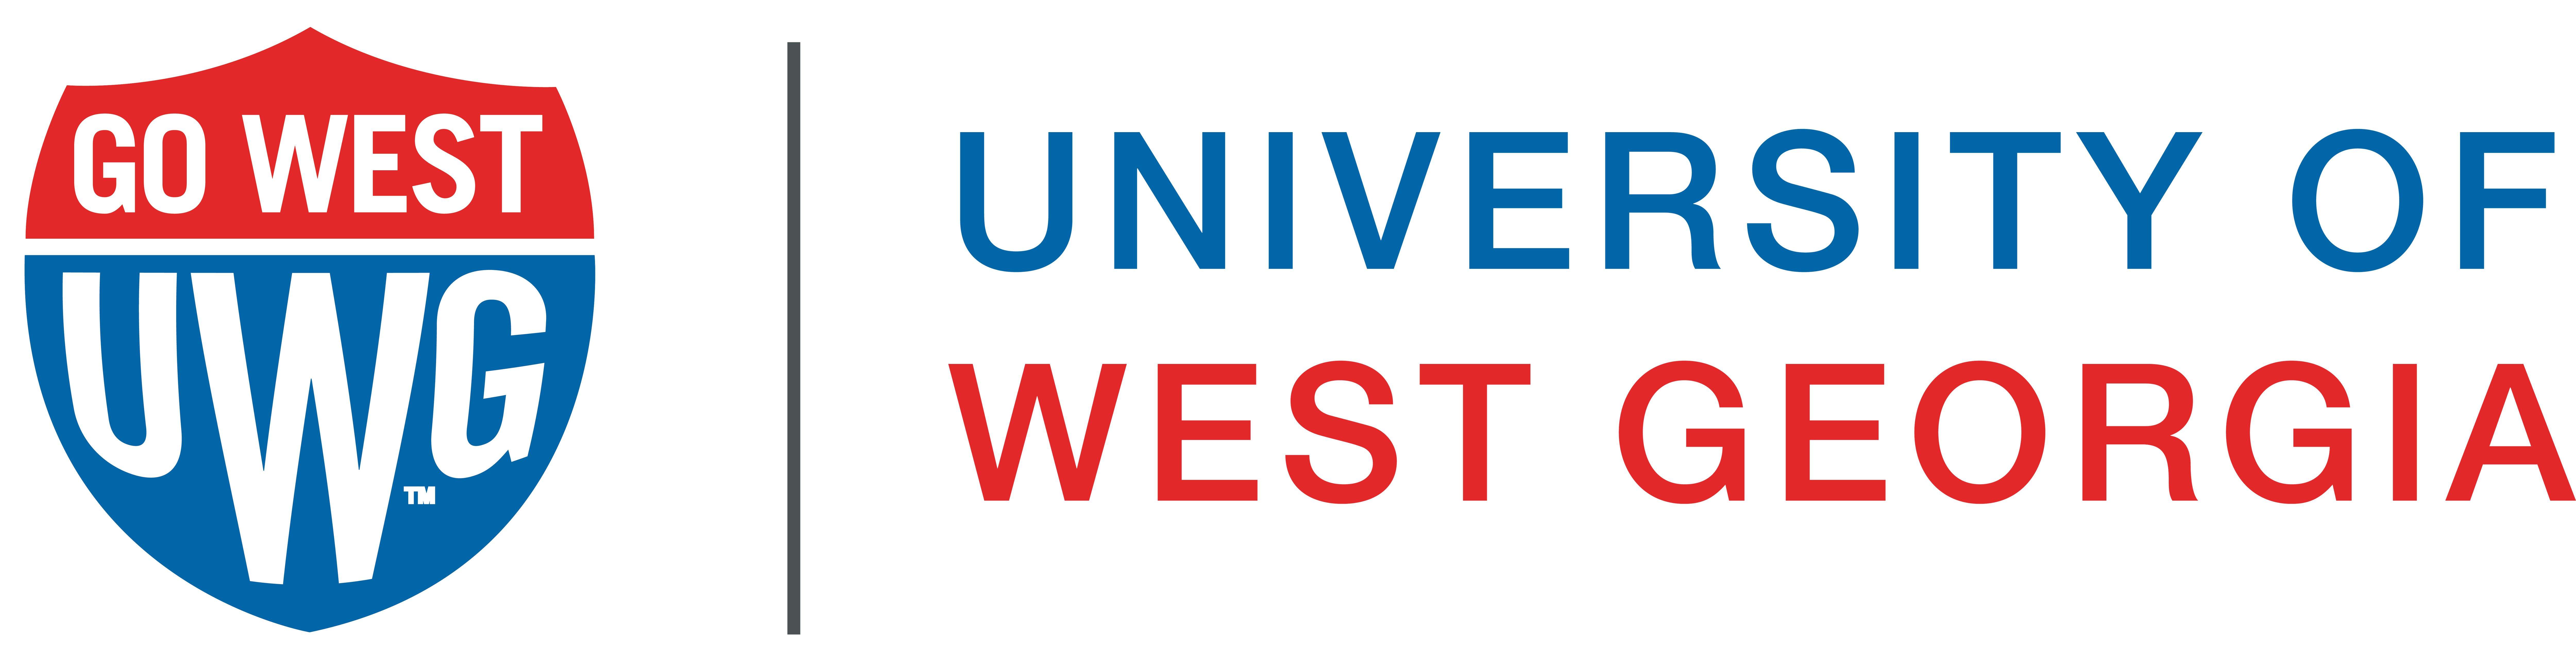 1.2 University of West Georgia